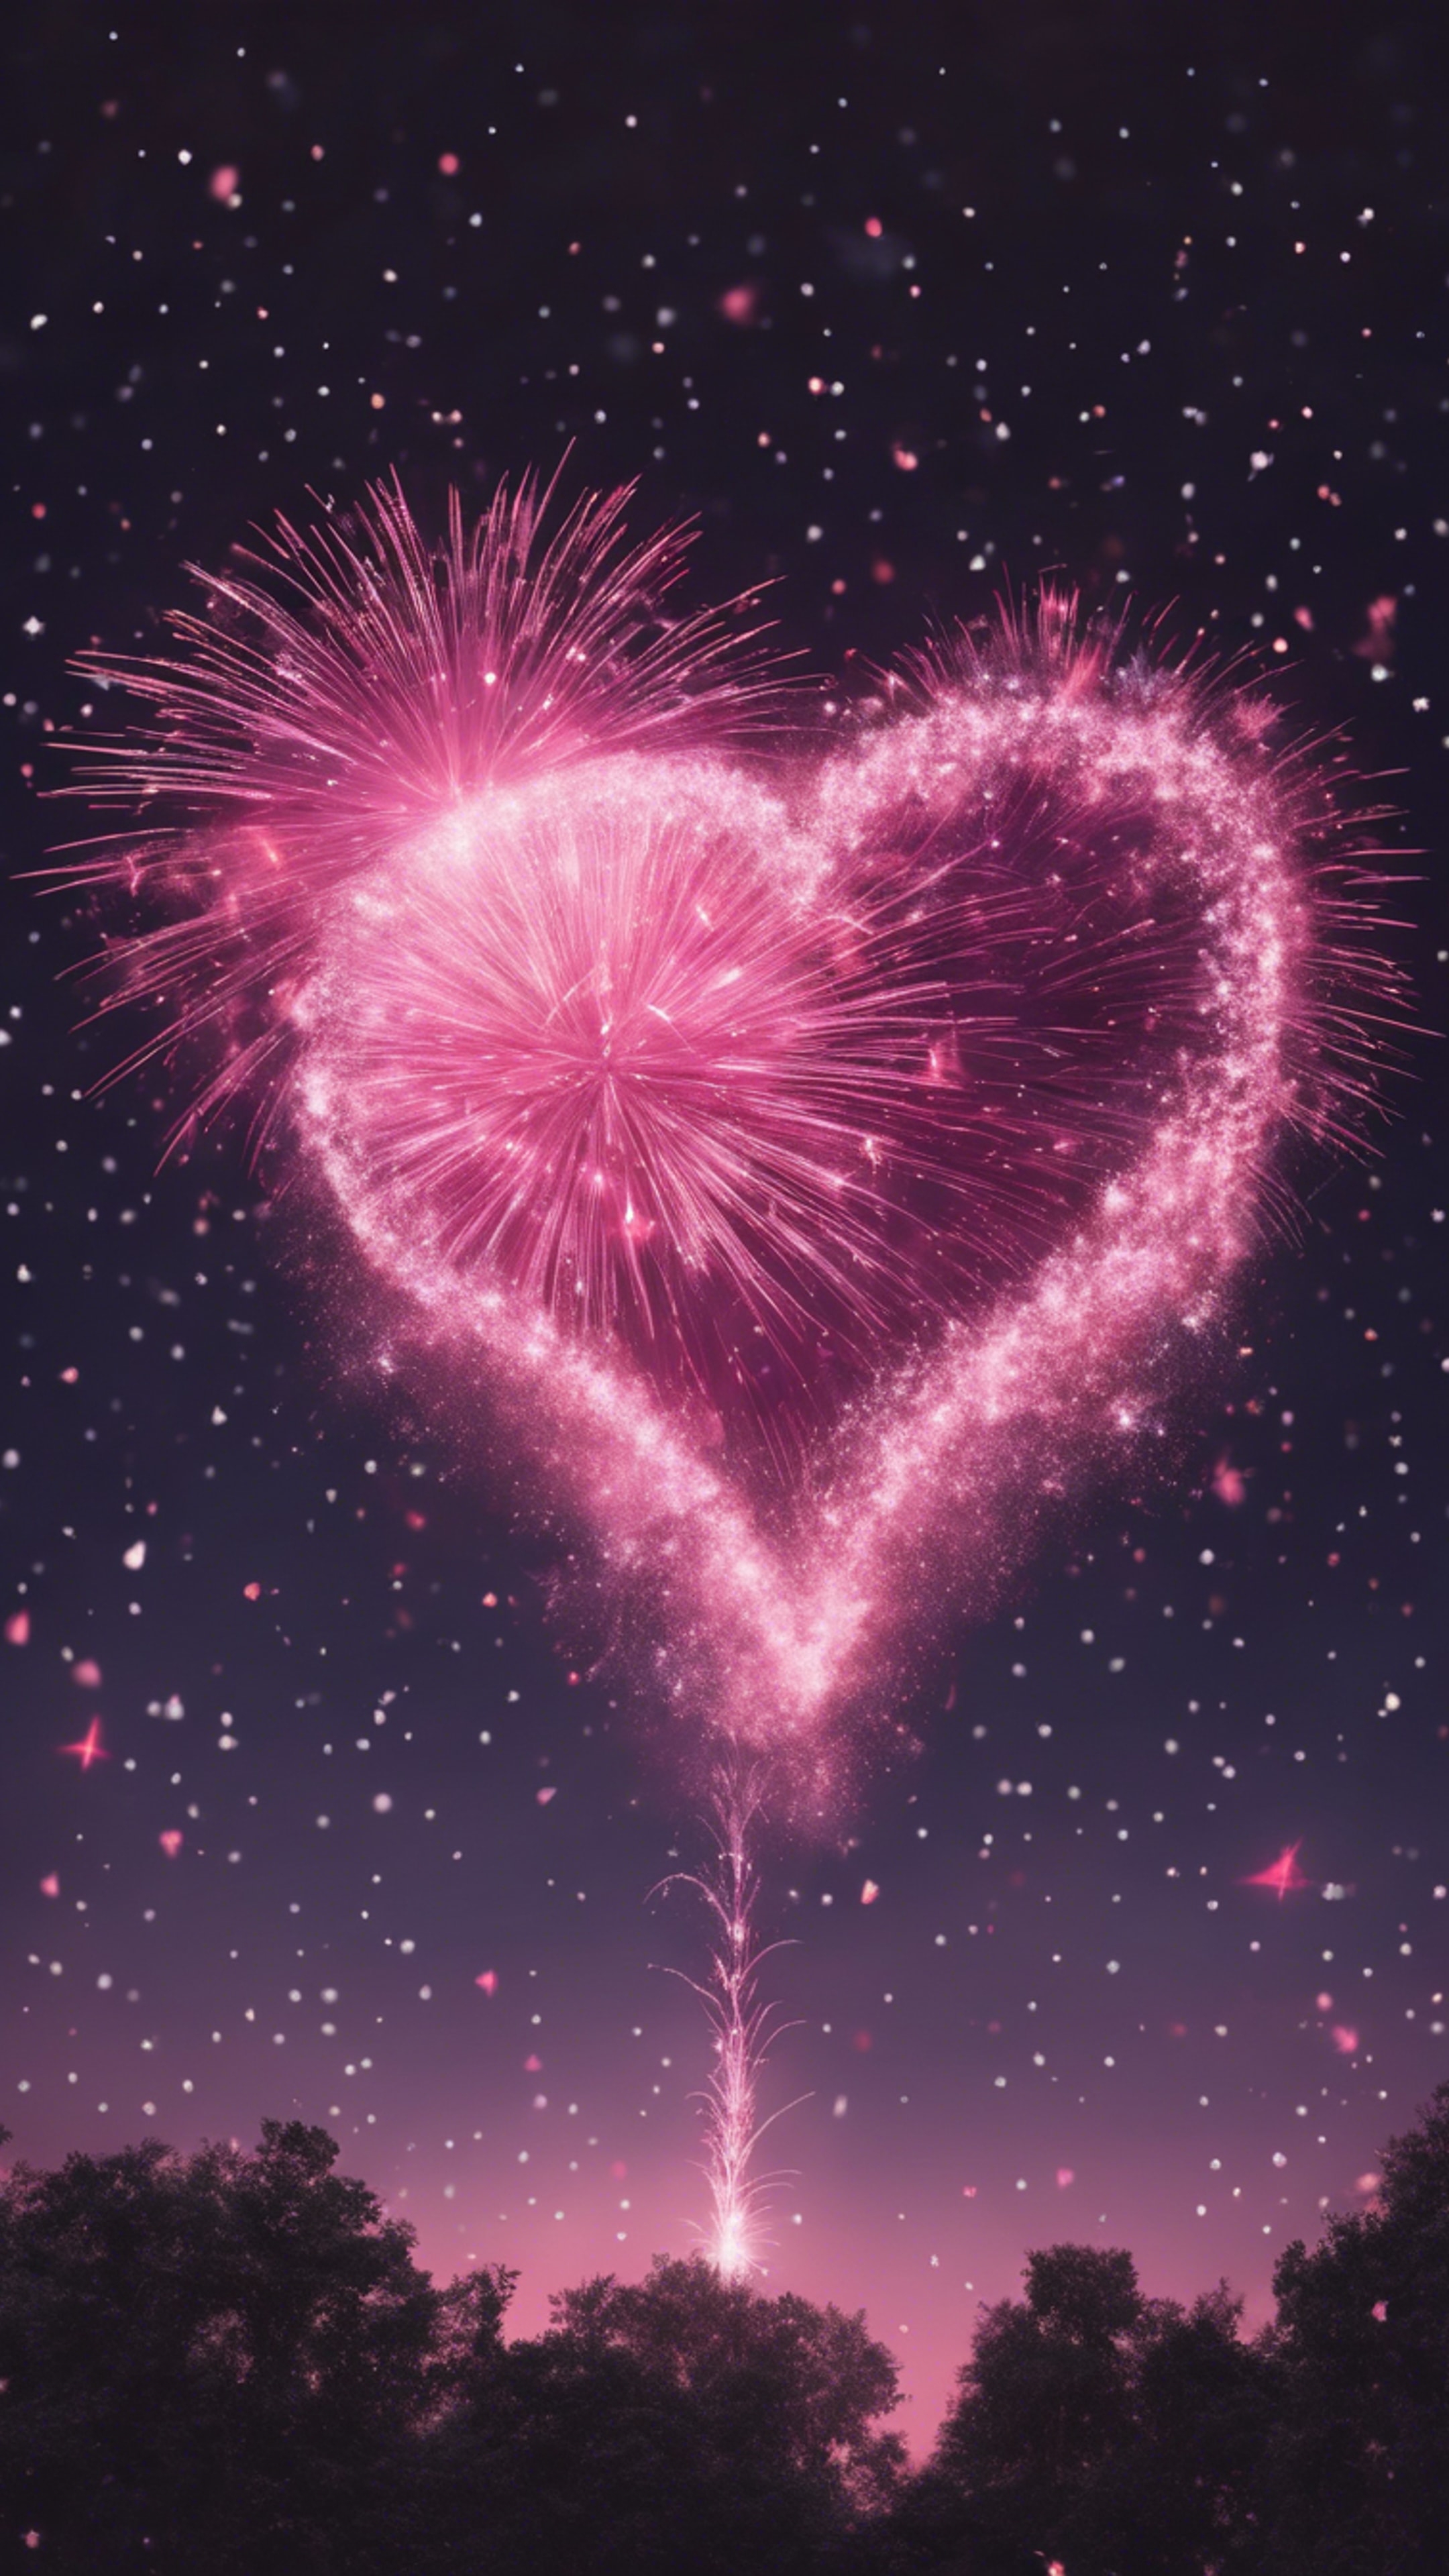 Pink heart-shaped fireworks bursting against a starry night sky.壁紙[a41ab1baeb444b18a97e]